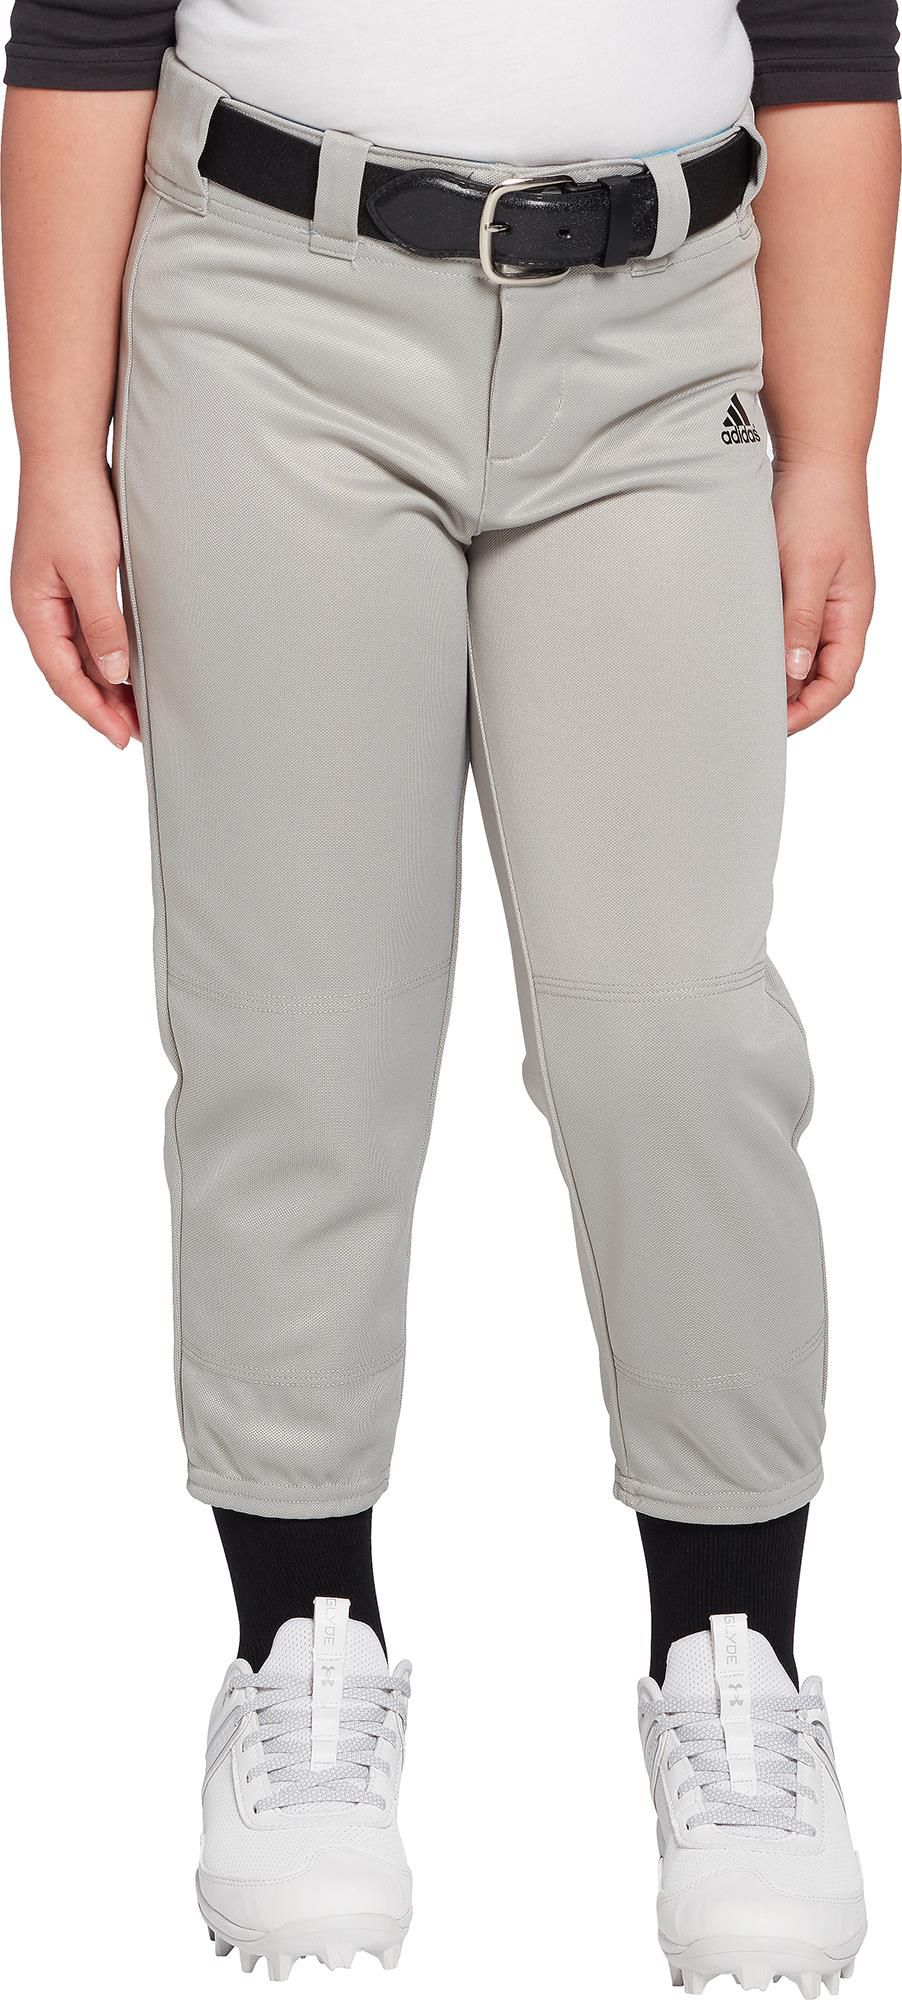 adidas Girls' Destiny Softball Pants 